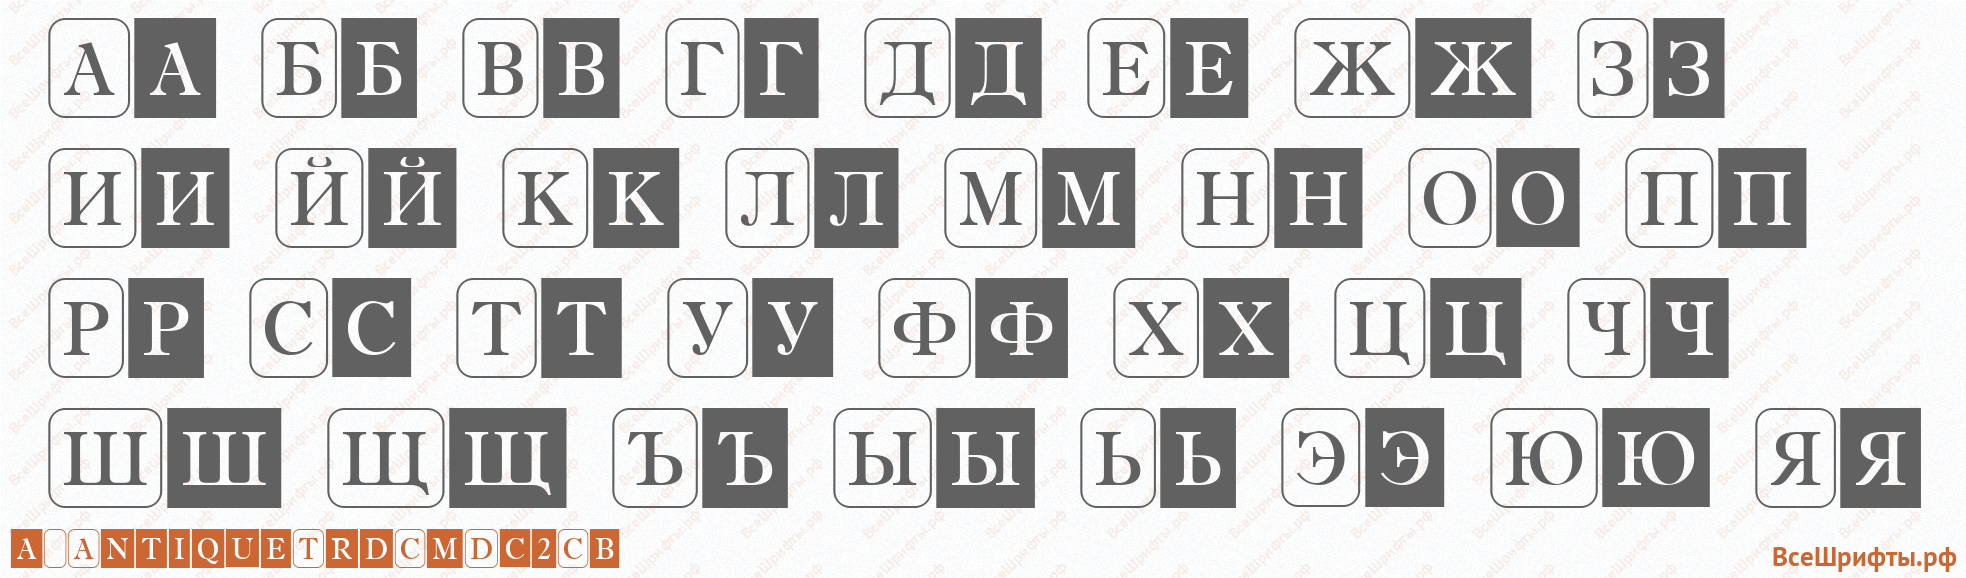 Шрифт a_AntiqueTrdCmDc2Cb с русскими буквами